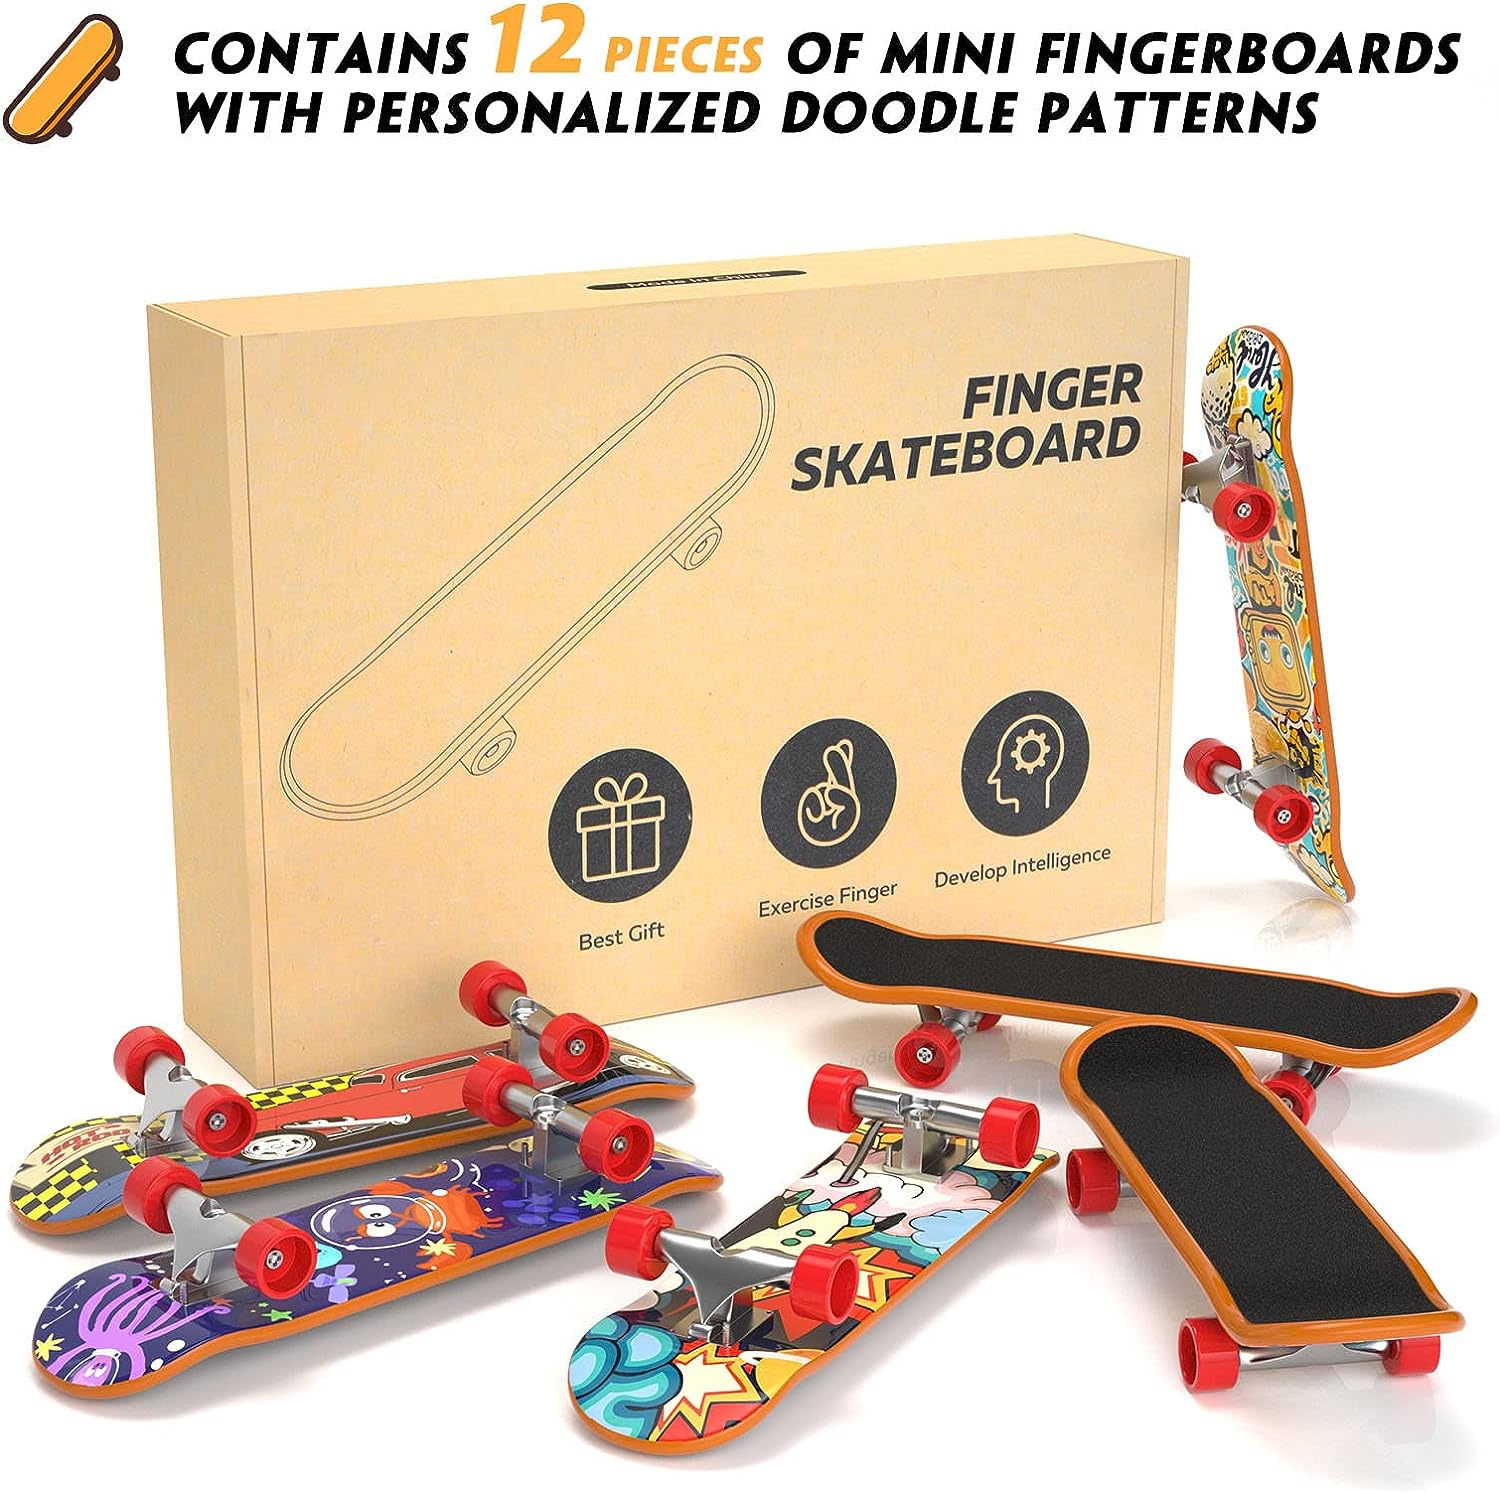 TIME4DEALS Fingerboard Mini Finger Skateboards Toys 12PCS Professional Finger Boards Set Creative Fingertips Movement, Mini Skateboard Starter Kit Finger Sports Party Favors Novelty Toy Gift for Kids